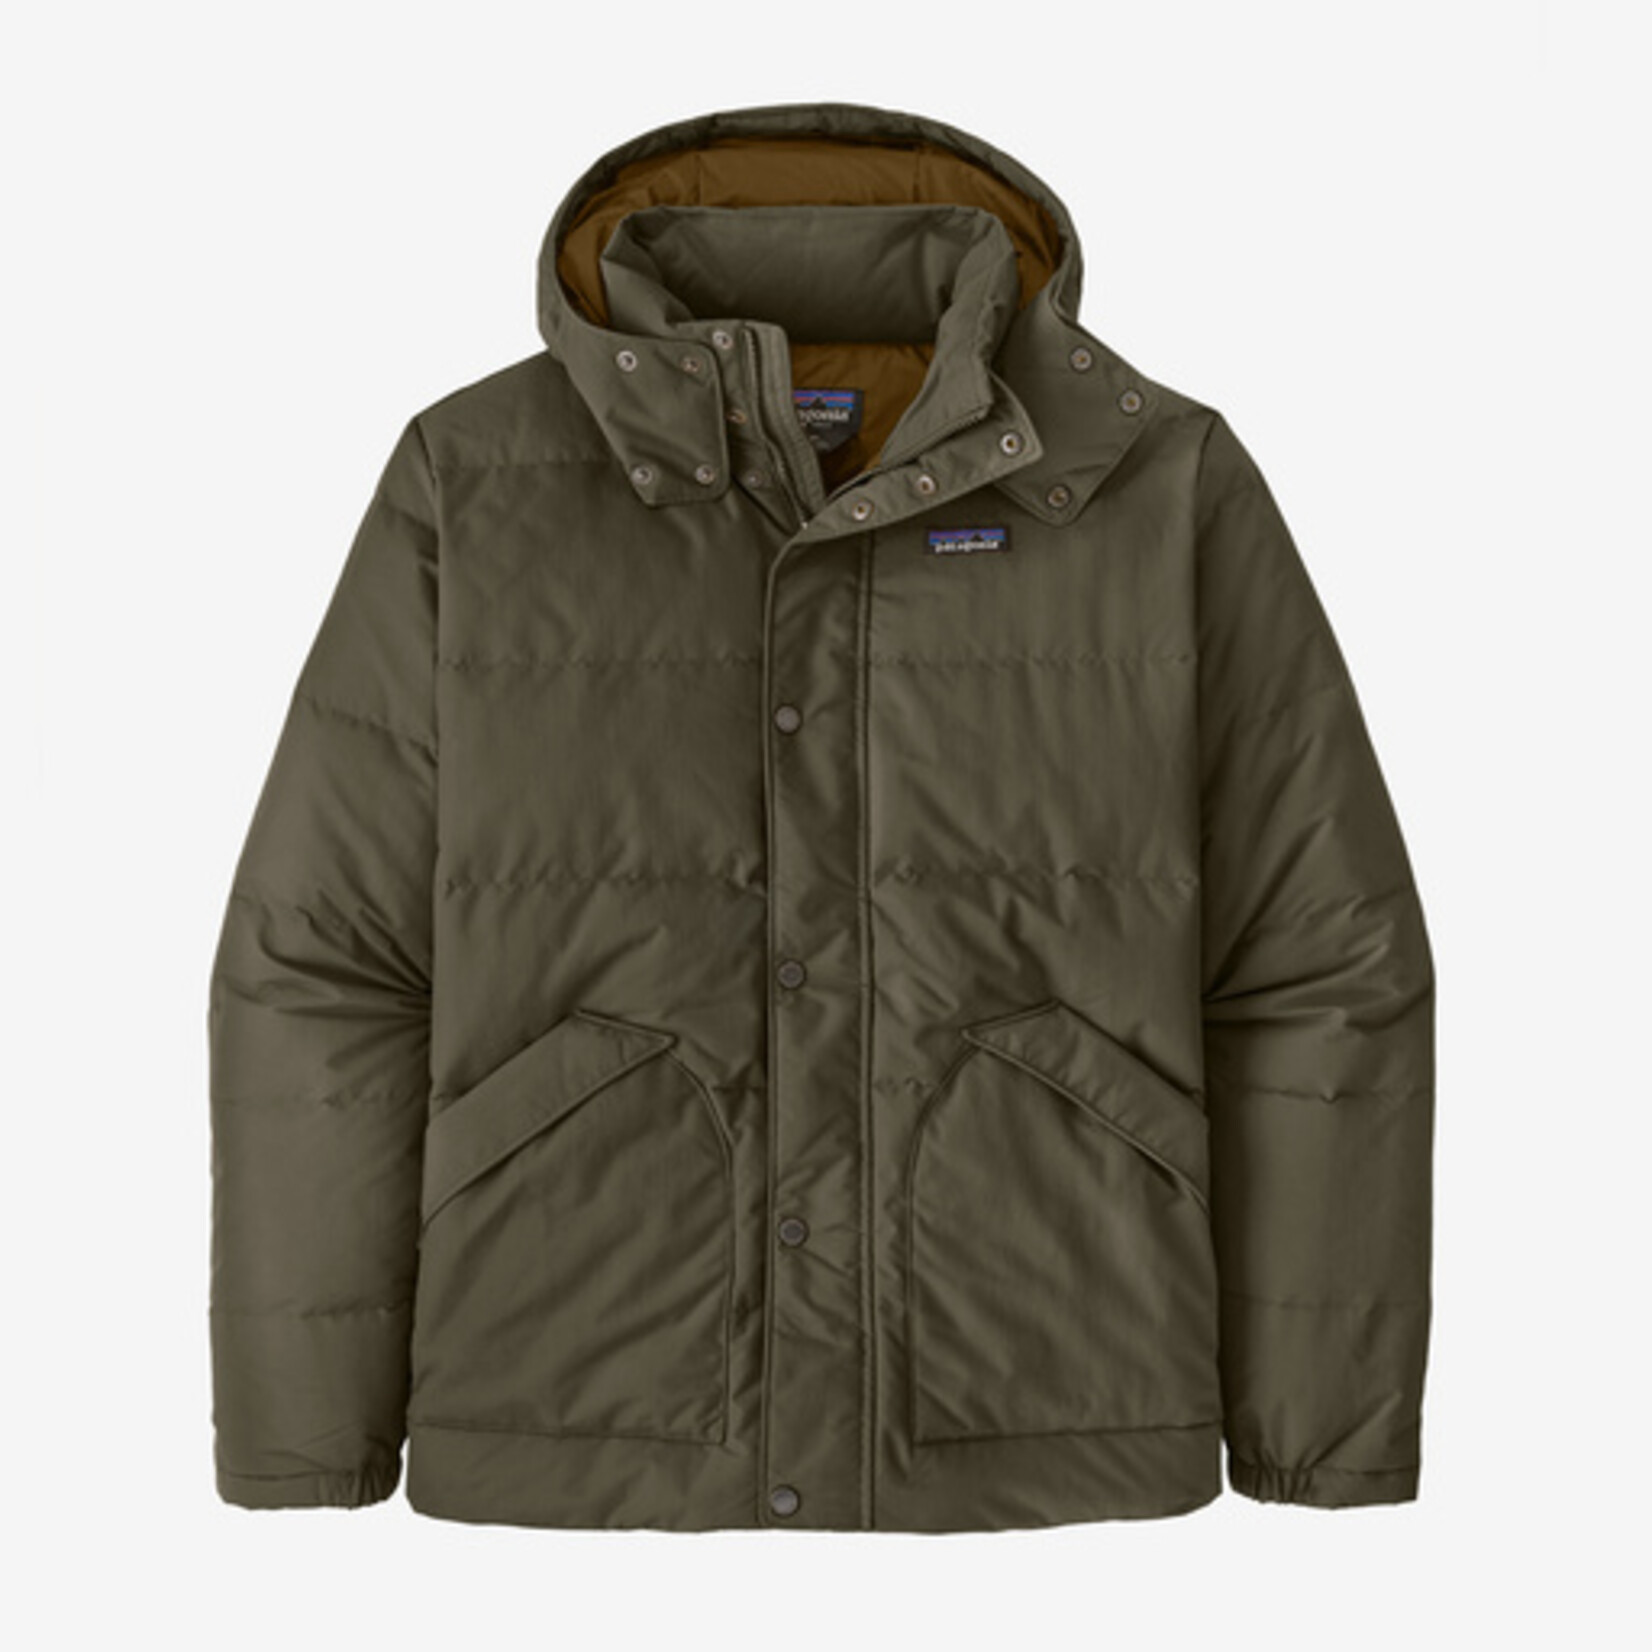 Patagonia M’s downdrift jacket